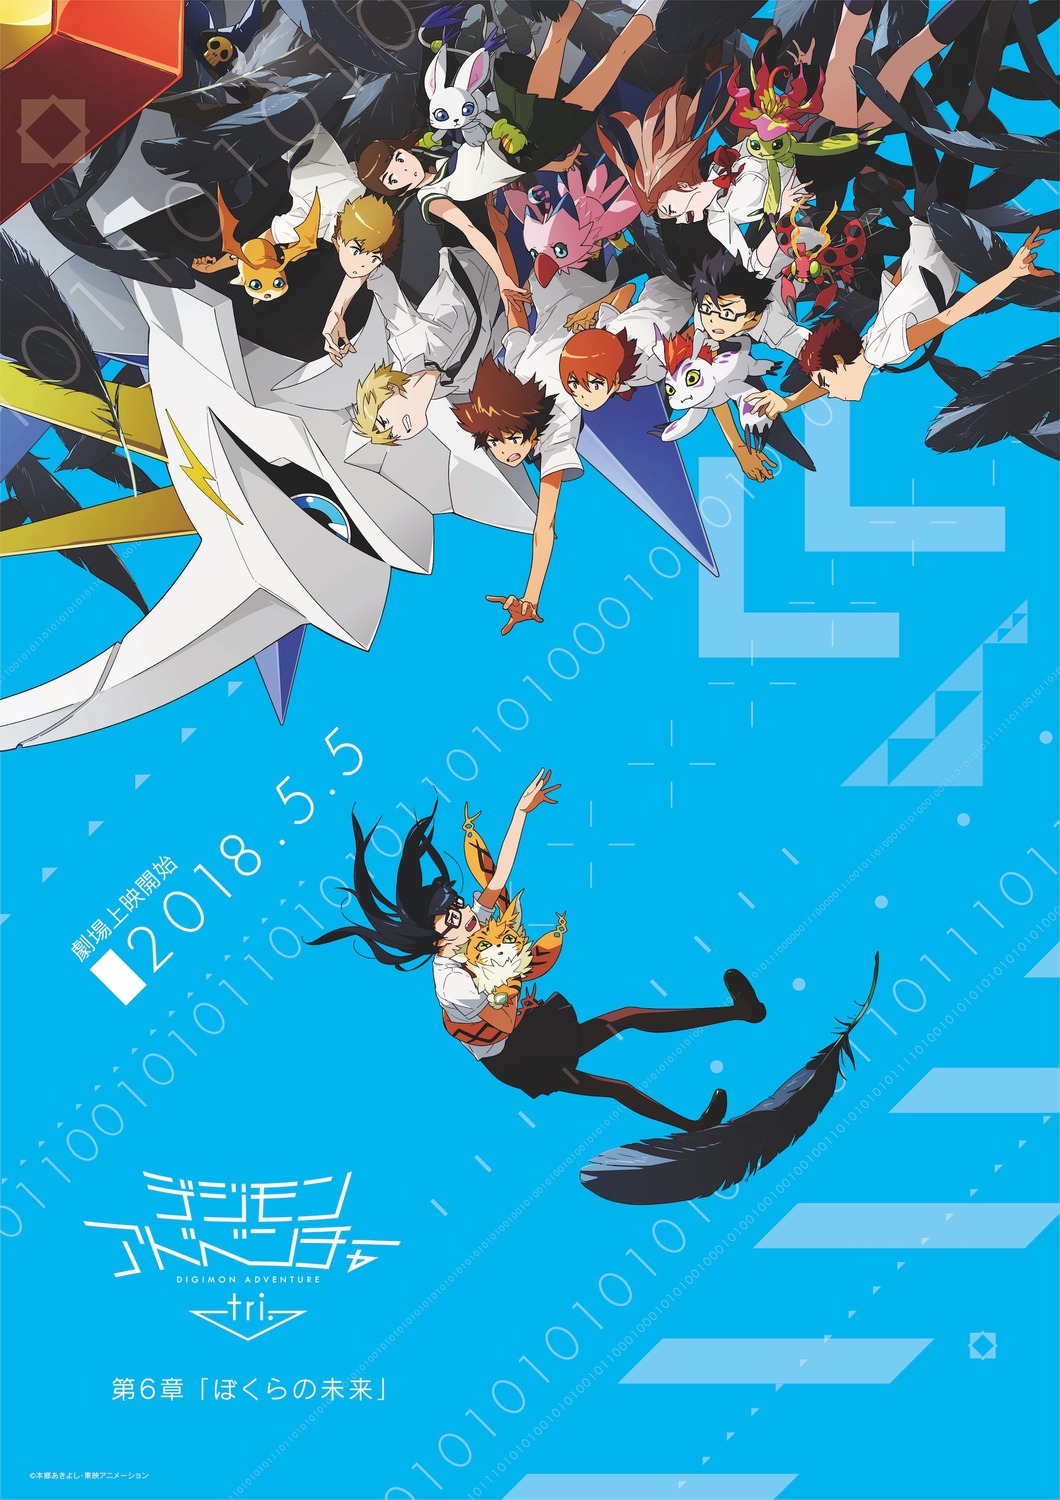 Extra Large Movie Poster Image for Digimon Adventure tri. 6: Bokura no mirai 